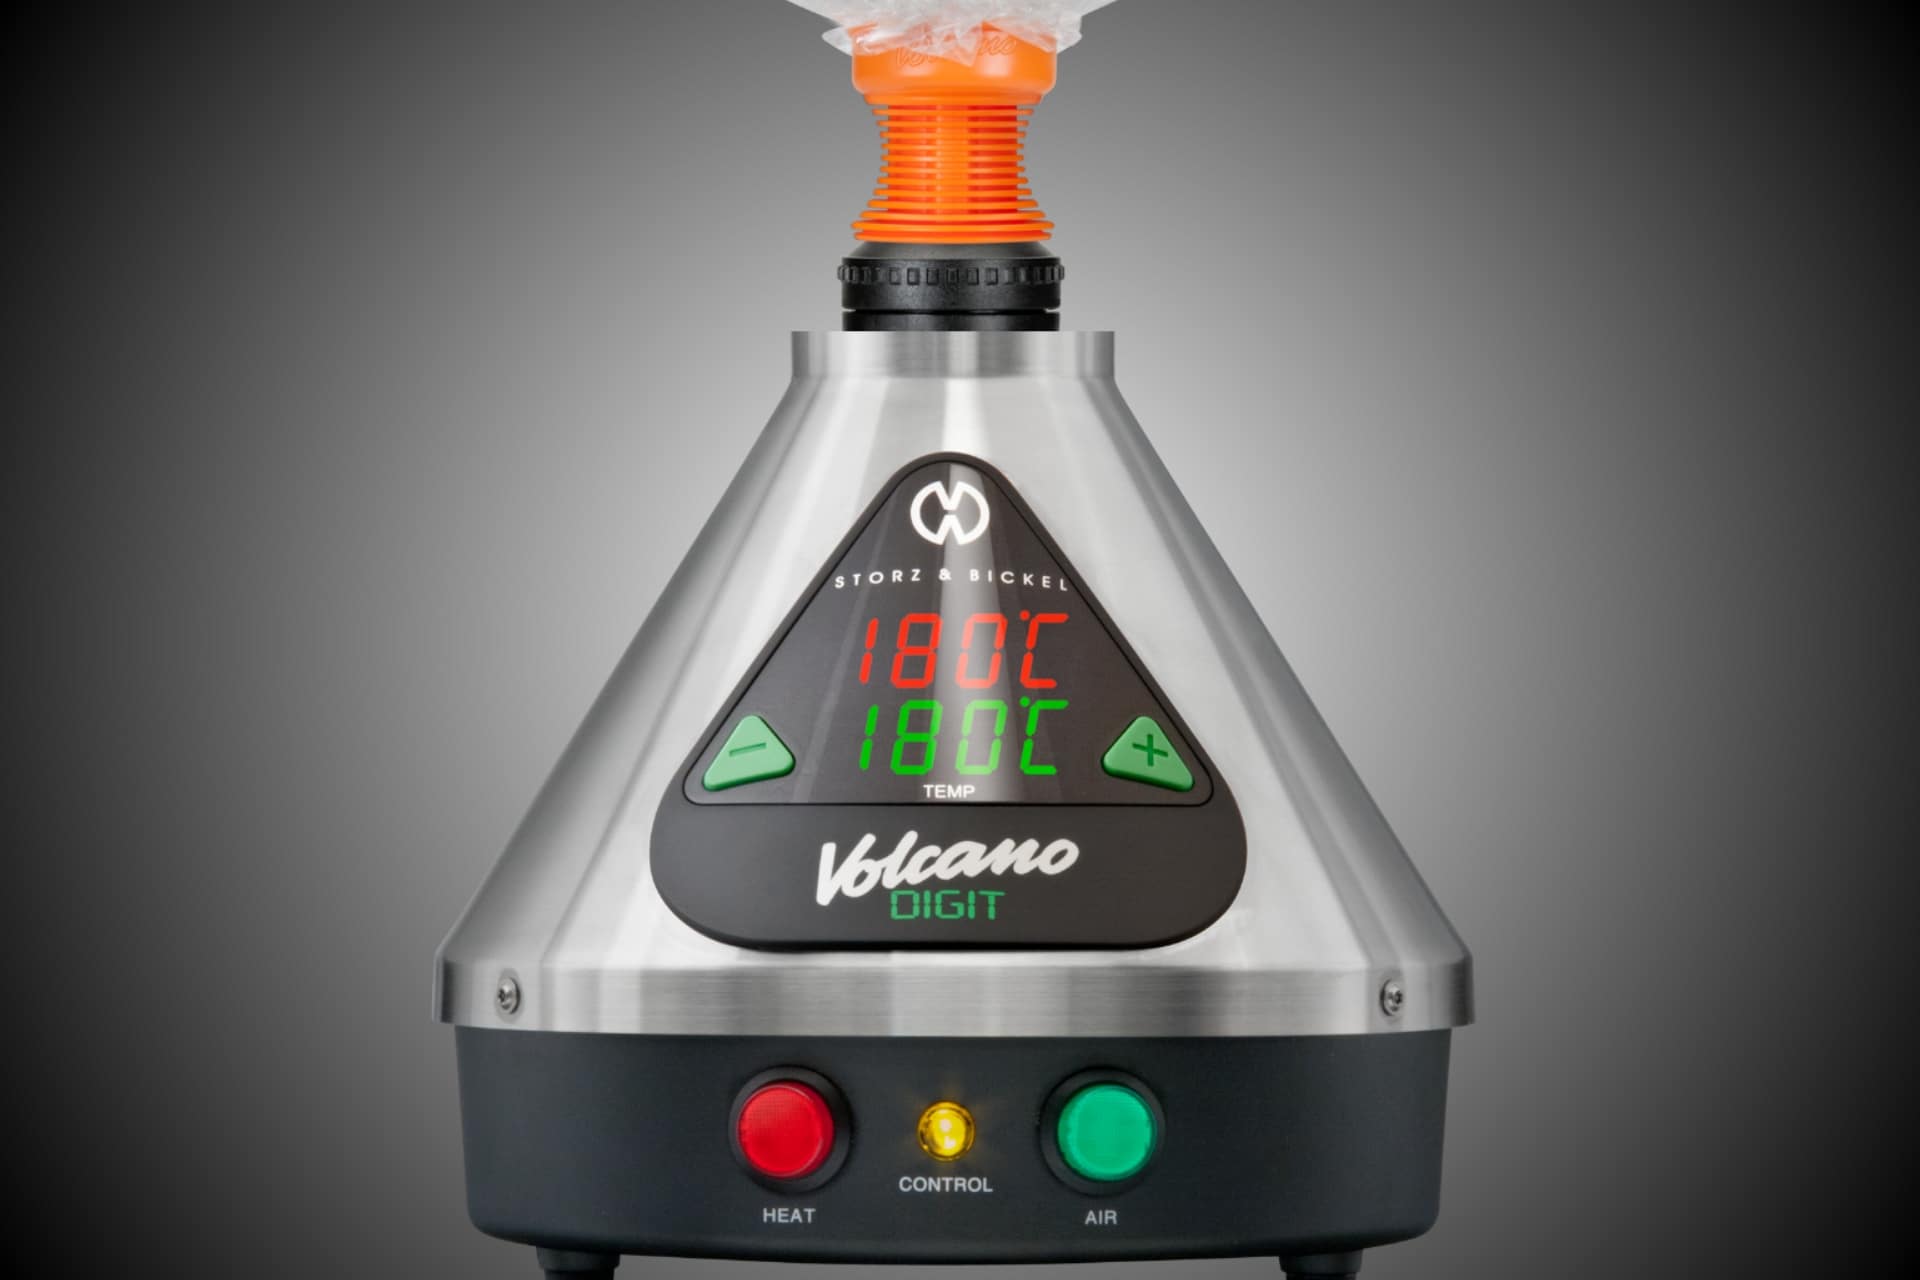 7 Reasons The Volcano Digital Is The Best Desktop Vaporizer On The Market